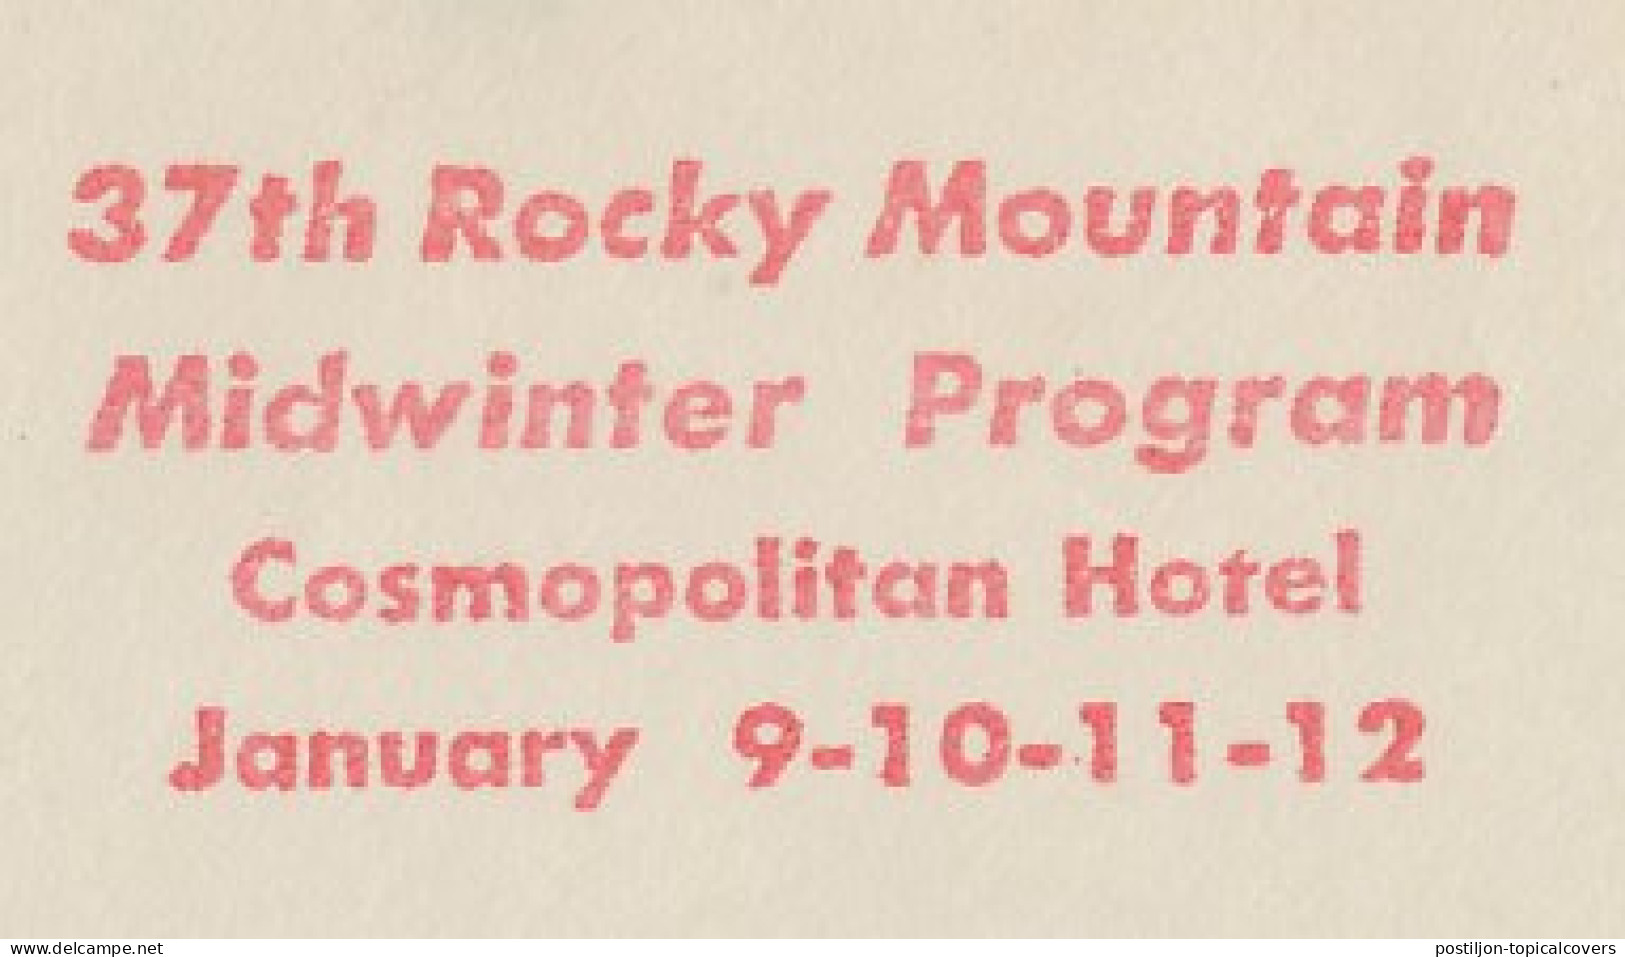 Meter Top Cut USA 1944 Dental Convention - Rocky Mountain Midwinter Program - Medicine